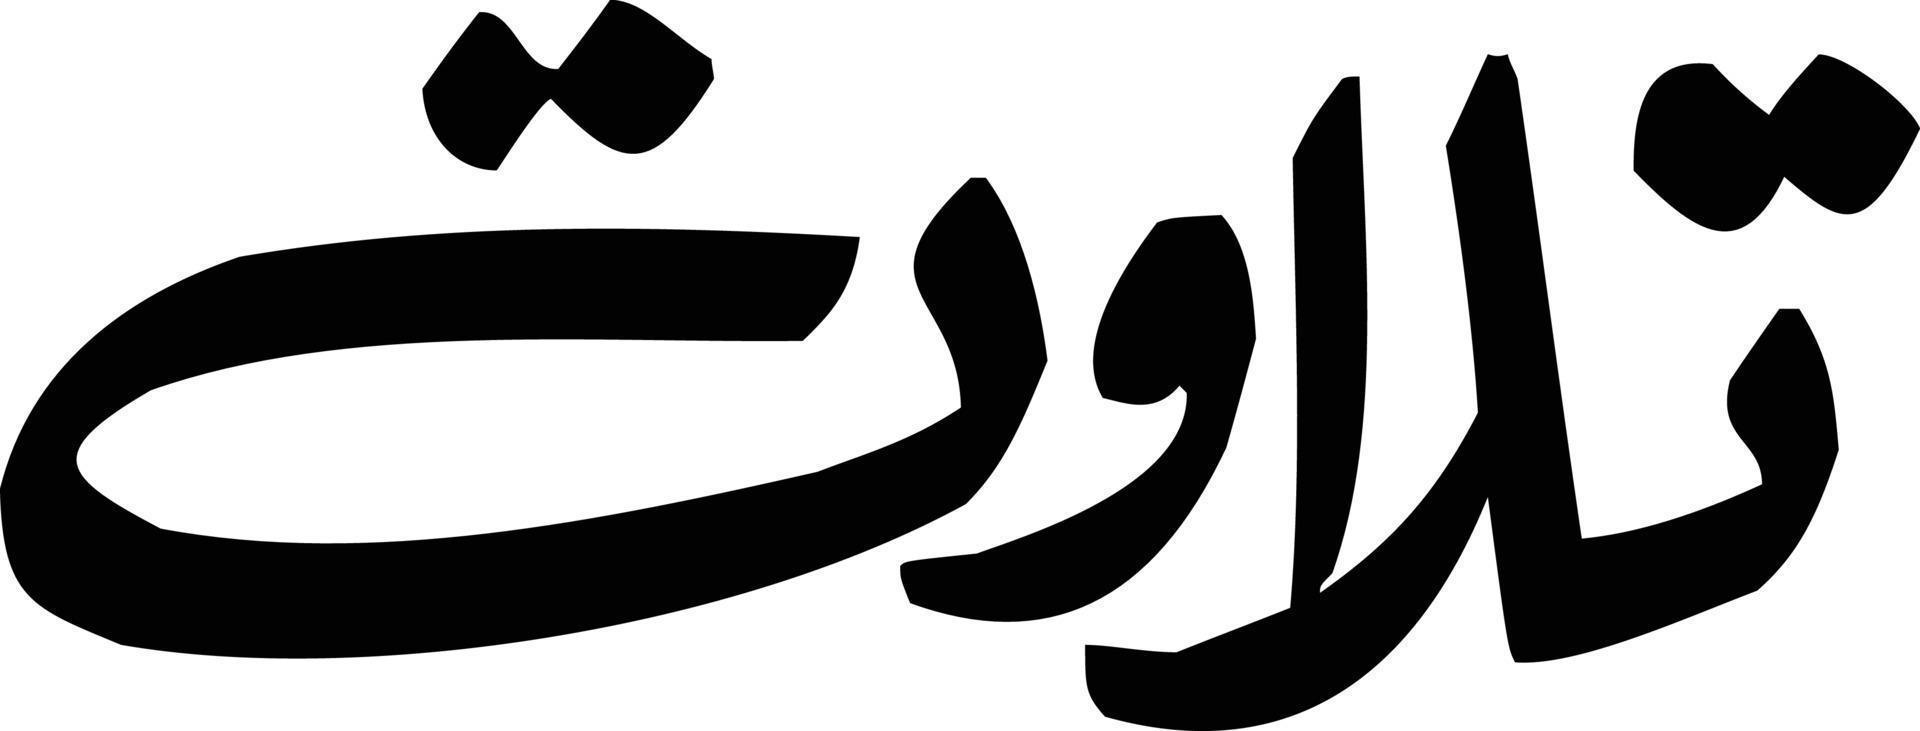 Tilawat islamic calligraphy Free Vector